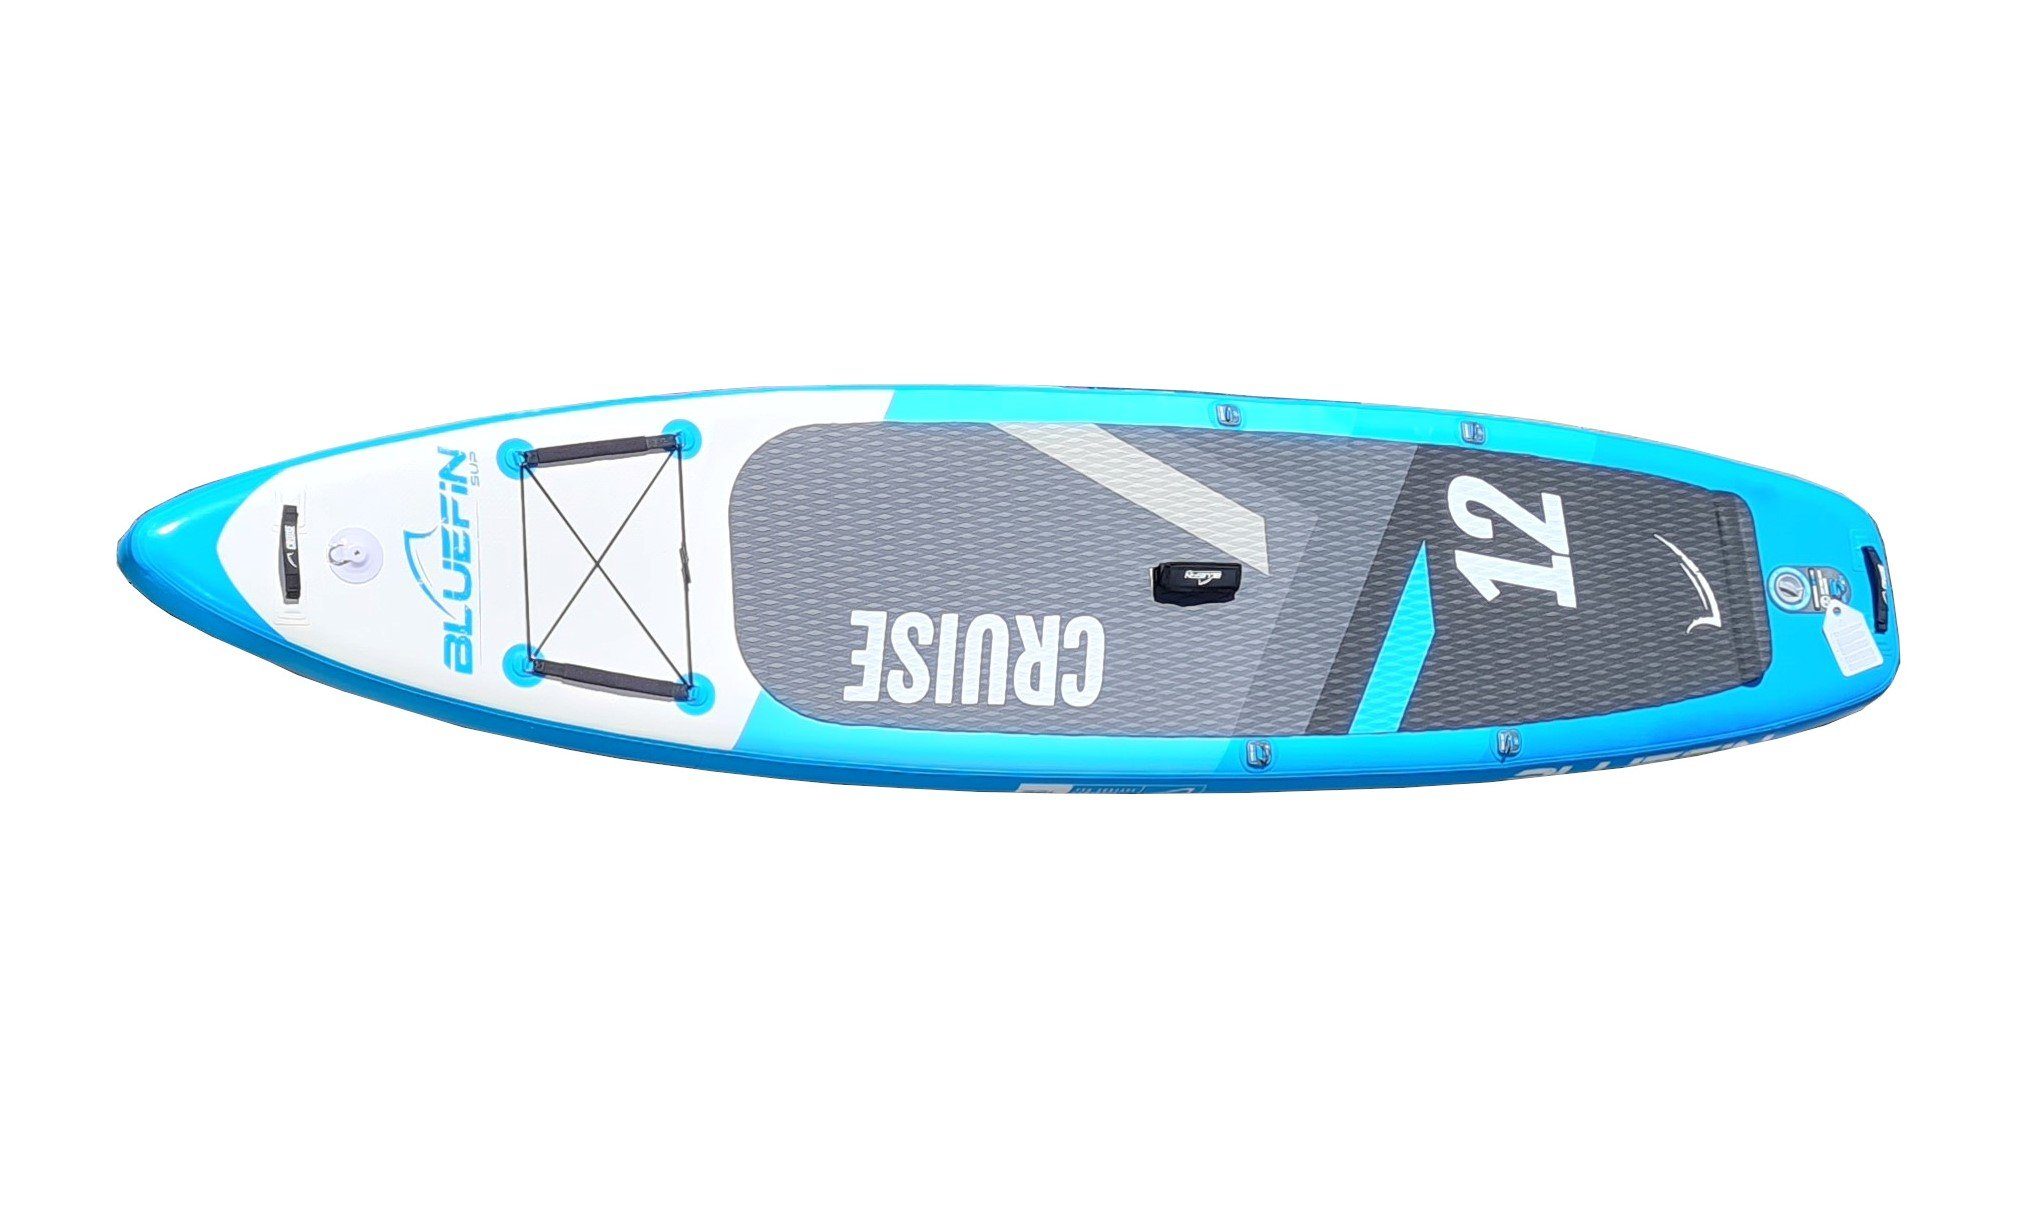 Conversion Freizeit-Paddleboard, (Set) Kit V3.0, 2020 mit Modell Cruise SUP SUP-Board Kajak 12' Bluefin (366cm)